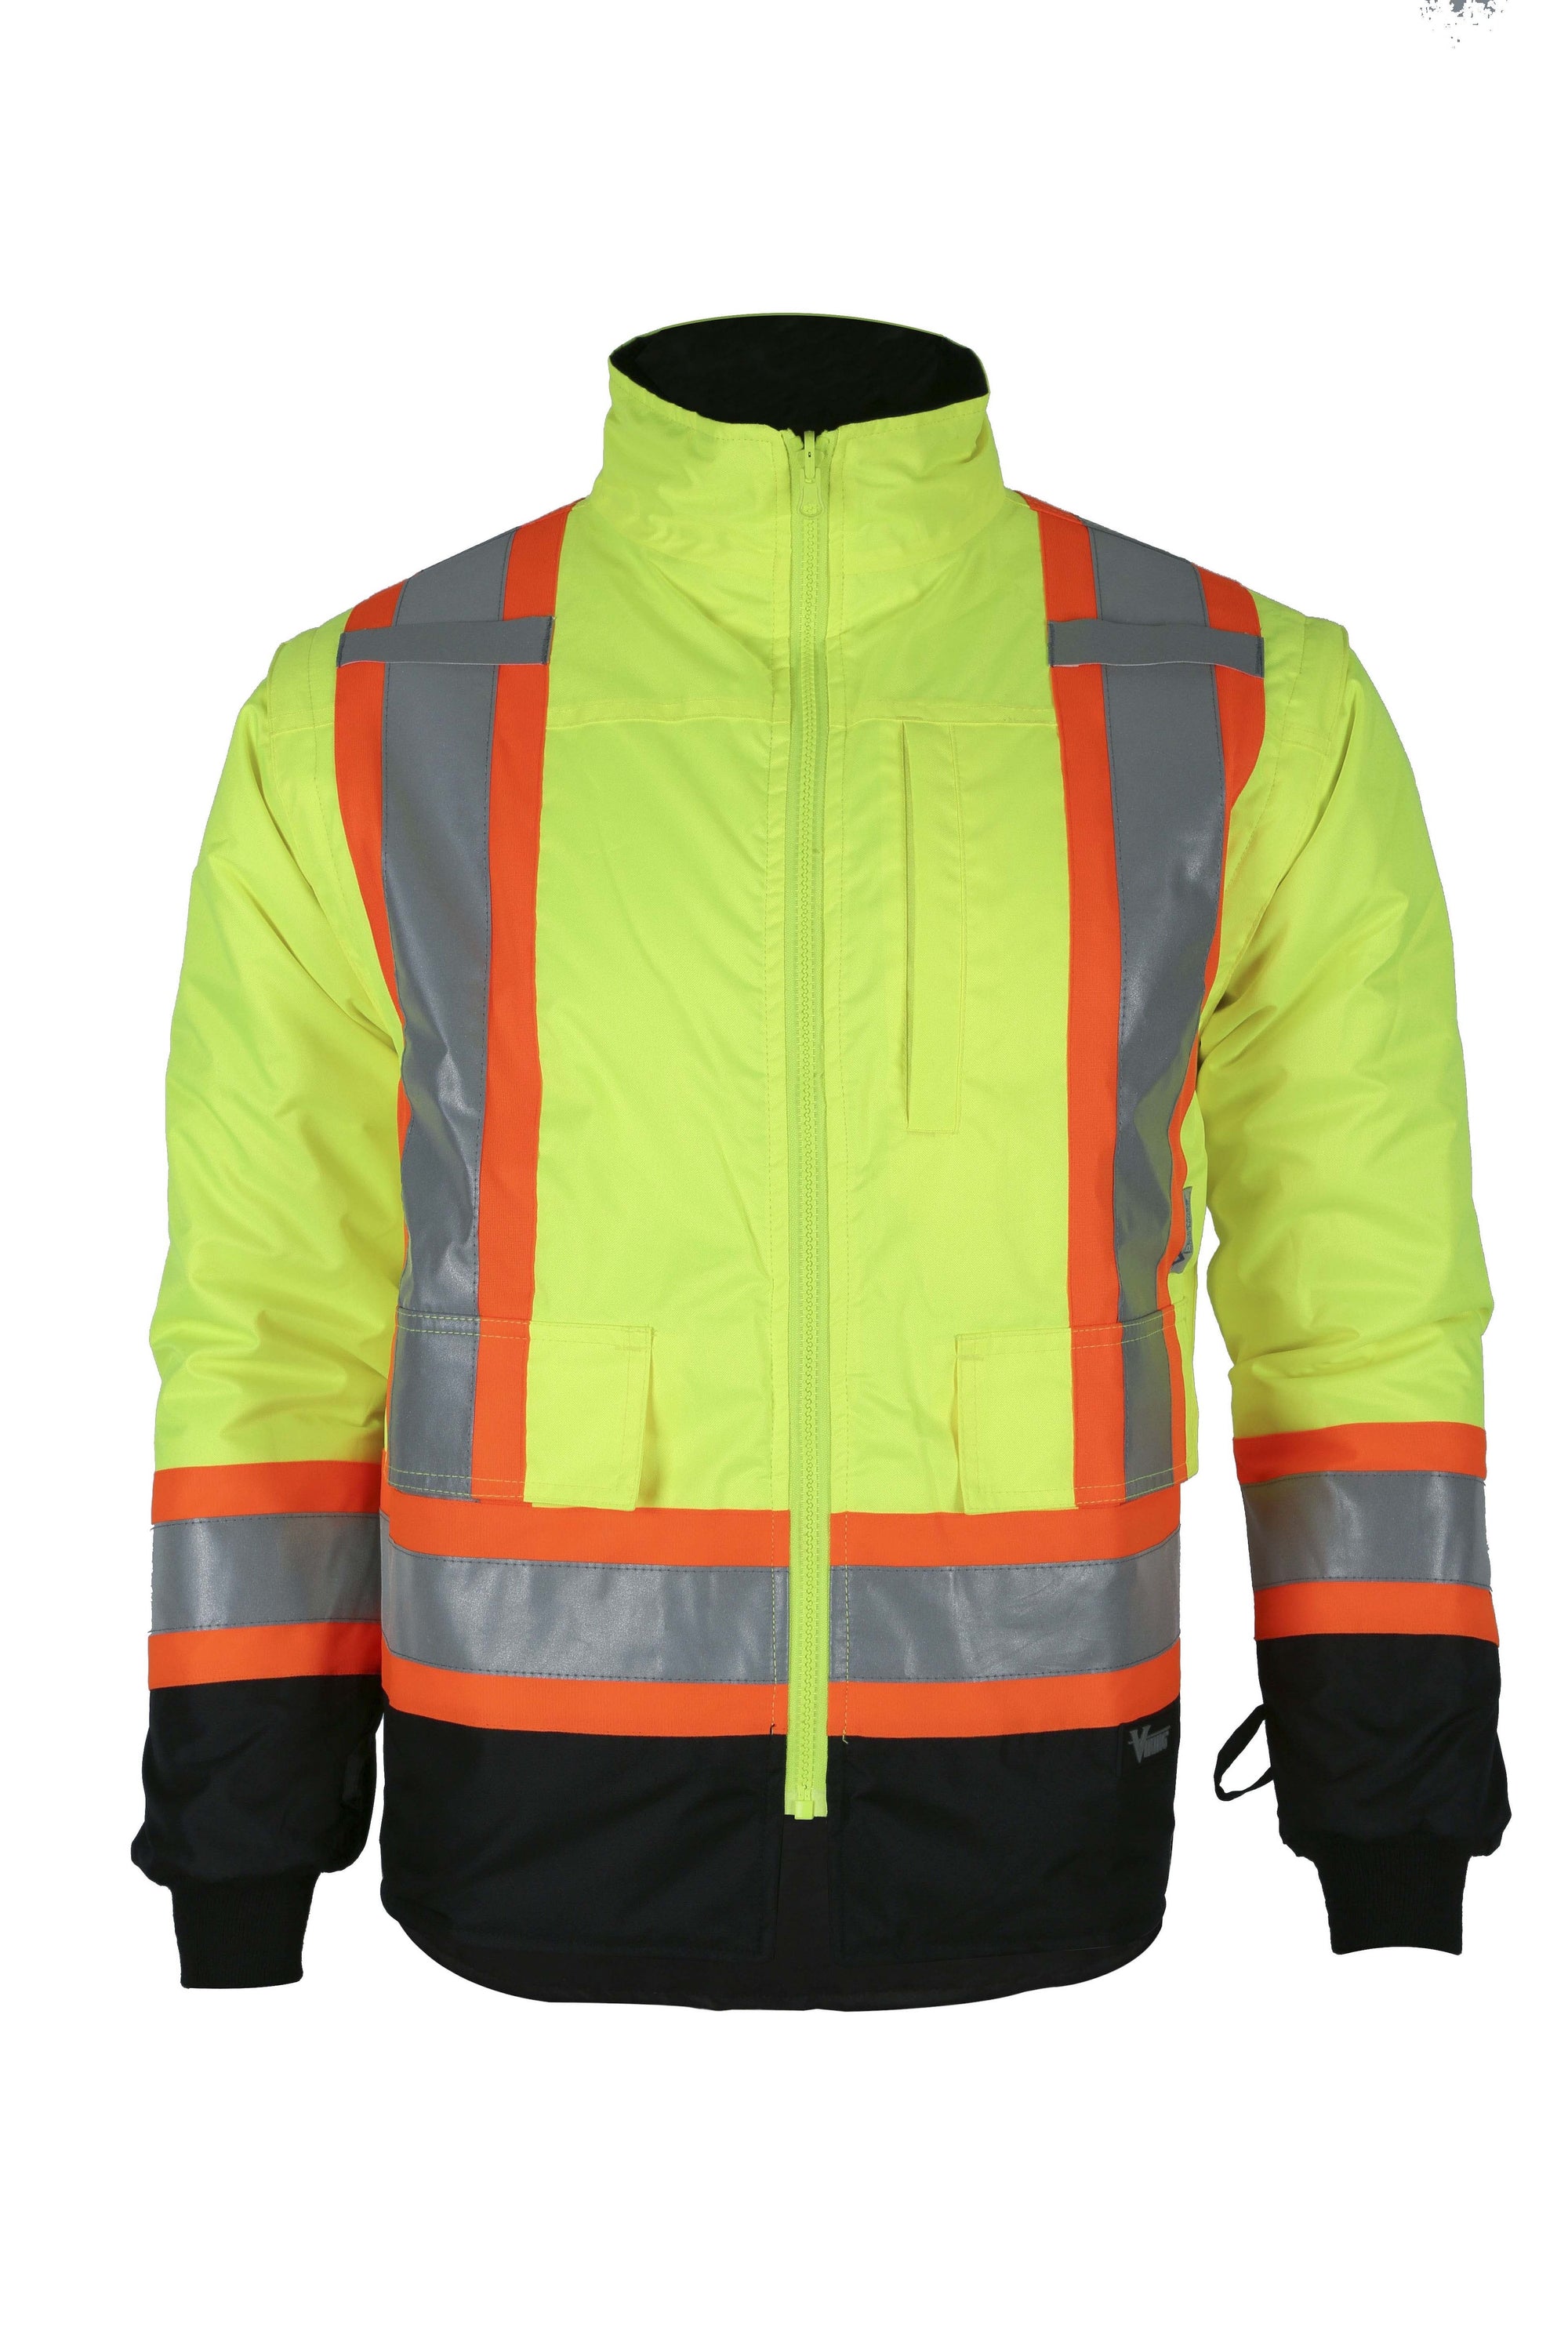 Viking Men's Handyman® Waterproof Class 1 Hi-Vis 7-in-1 Rain Jacket_Hi-Vis Green - Work World - Workwear, Work Boots, Safety Gear